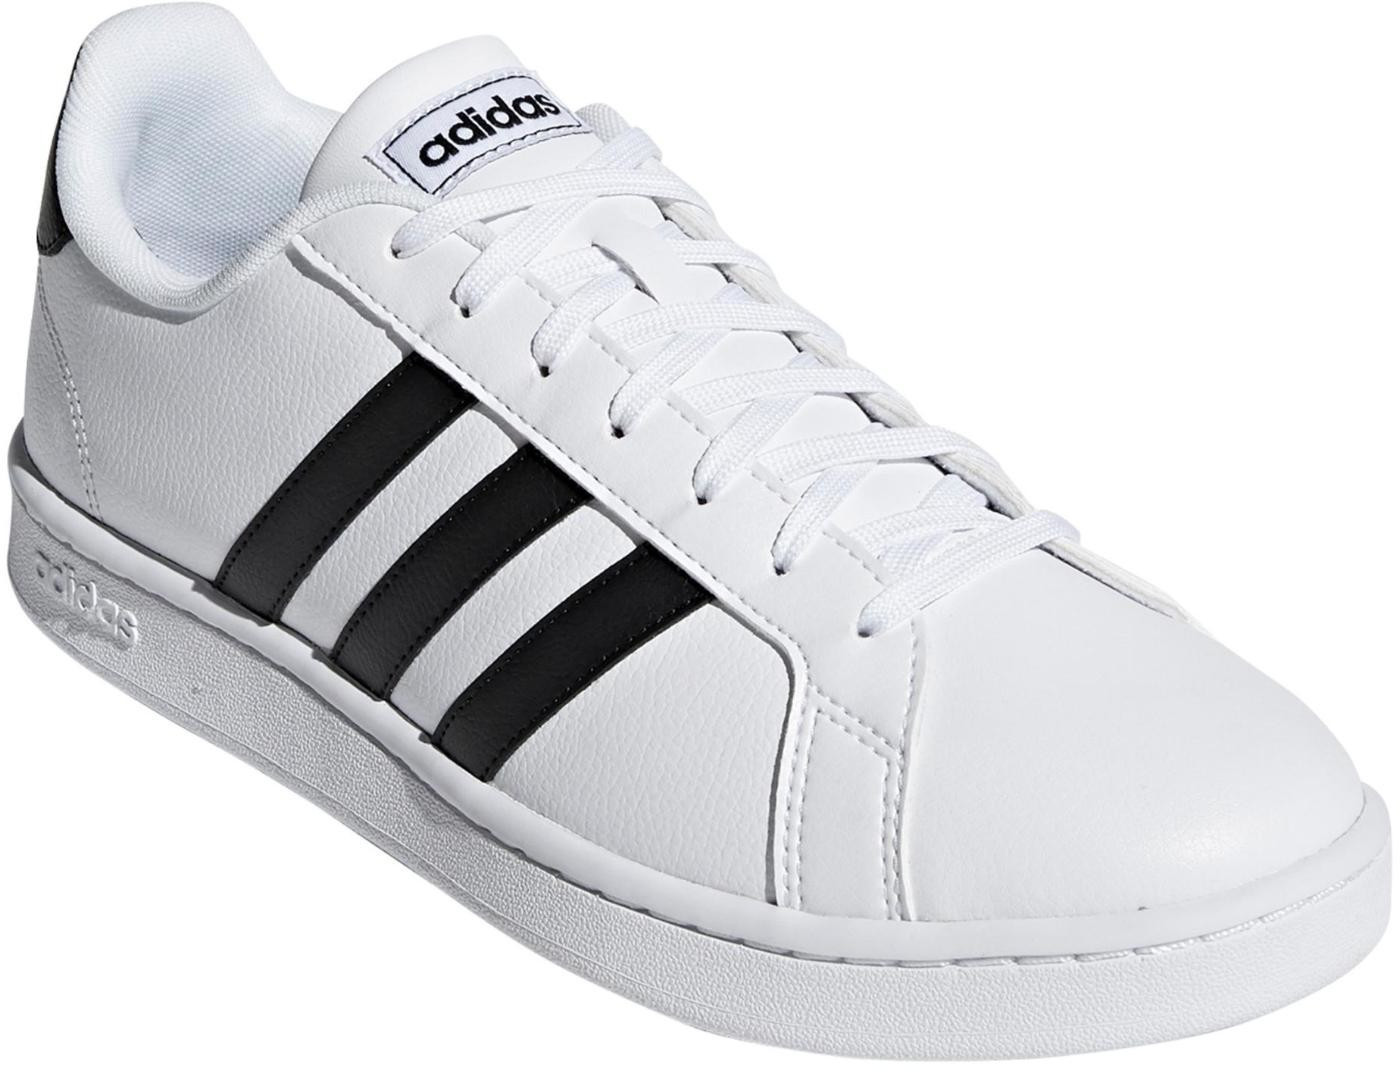 Buy Adidas Grand Court ftwr white/core black/ftwr white from £26.48 ...